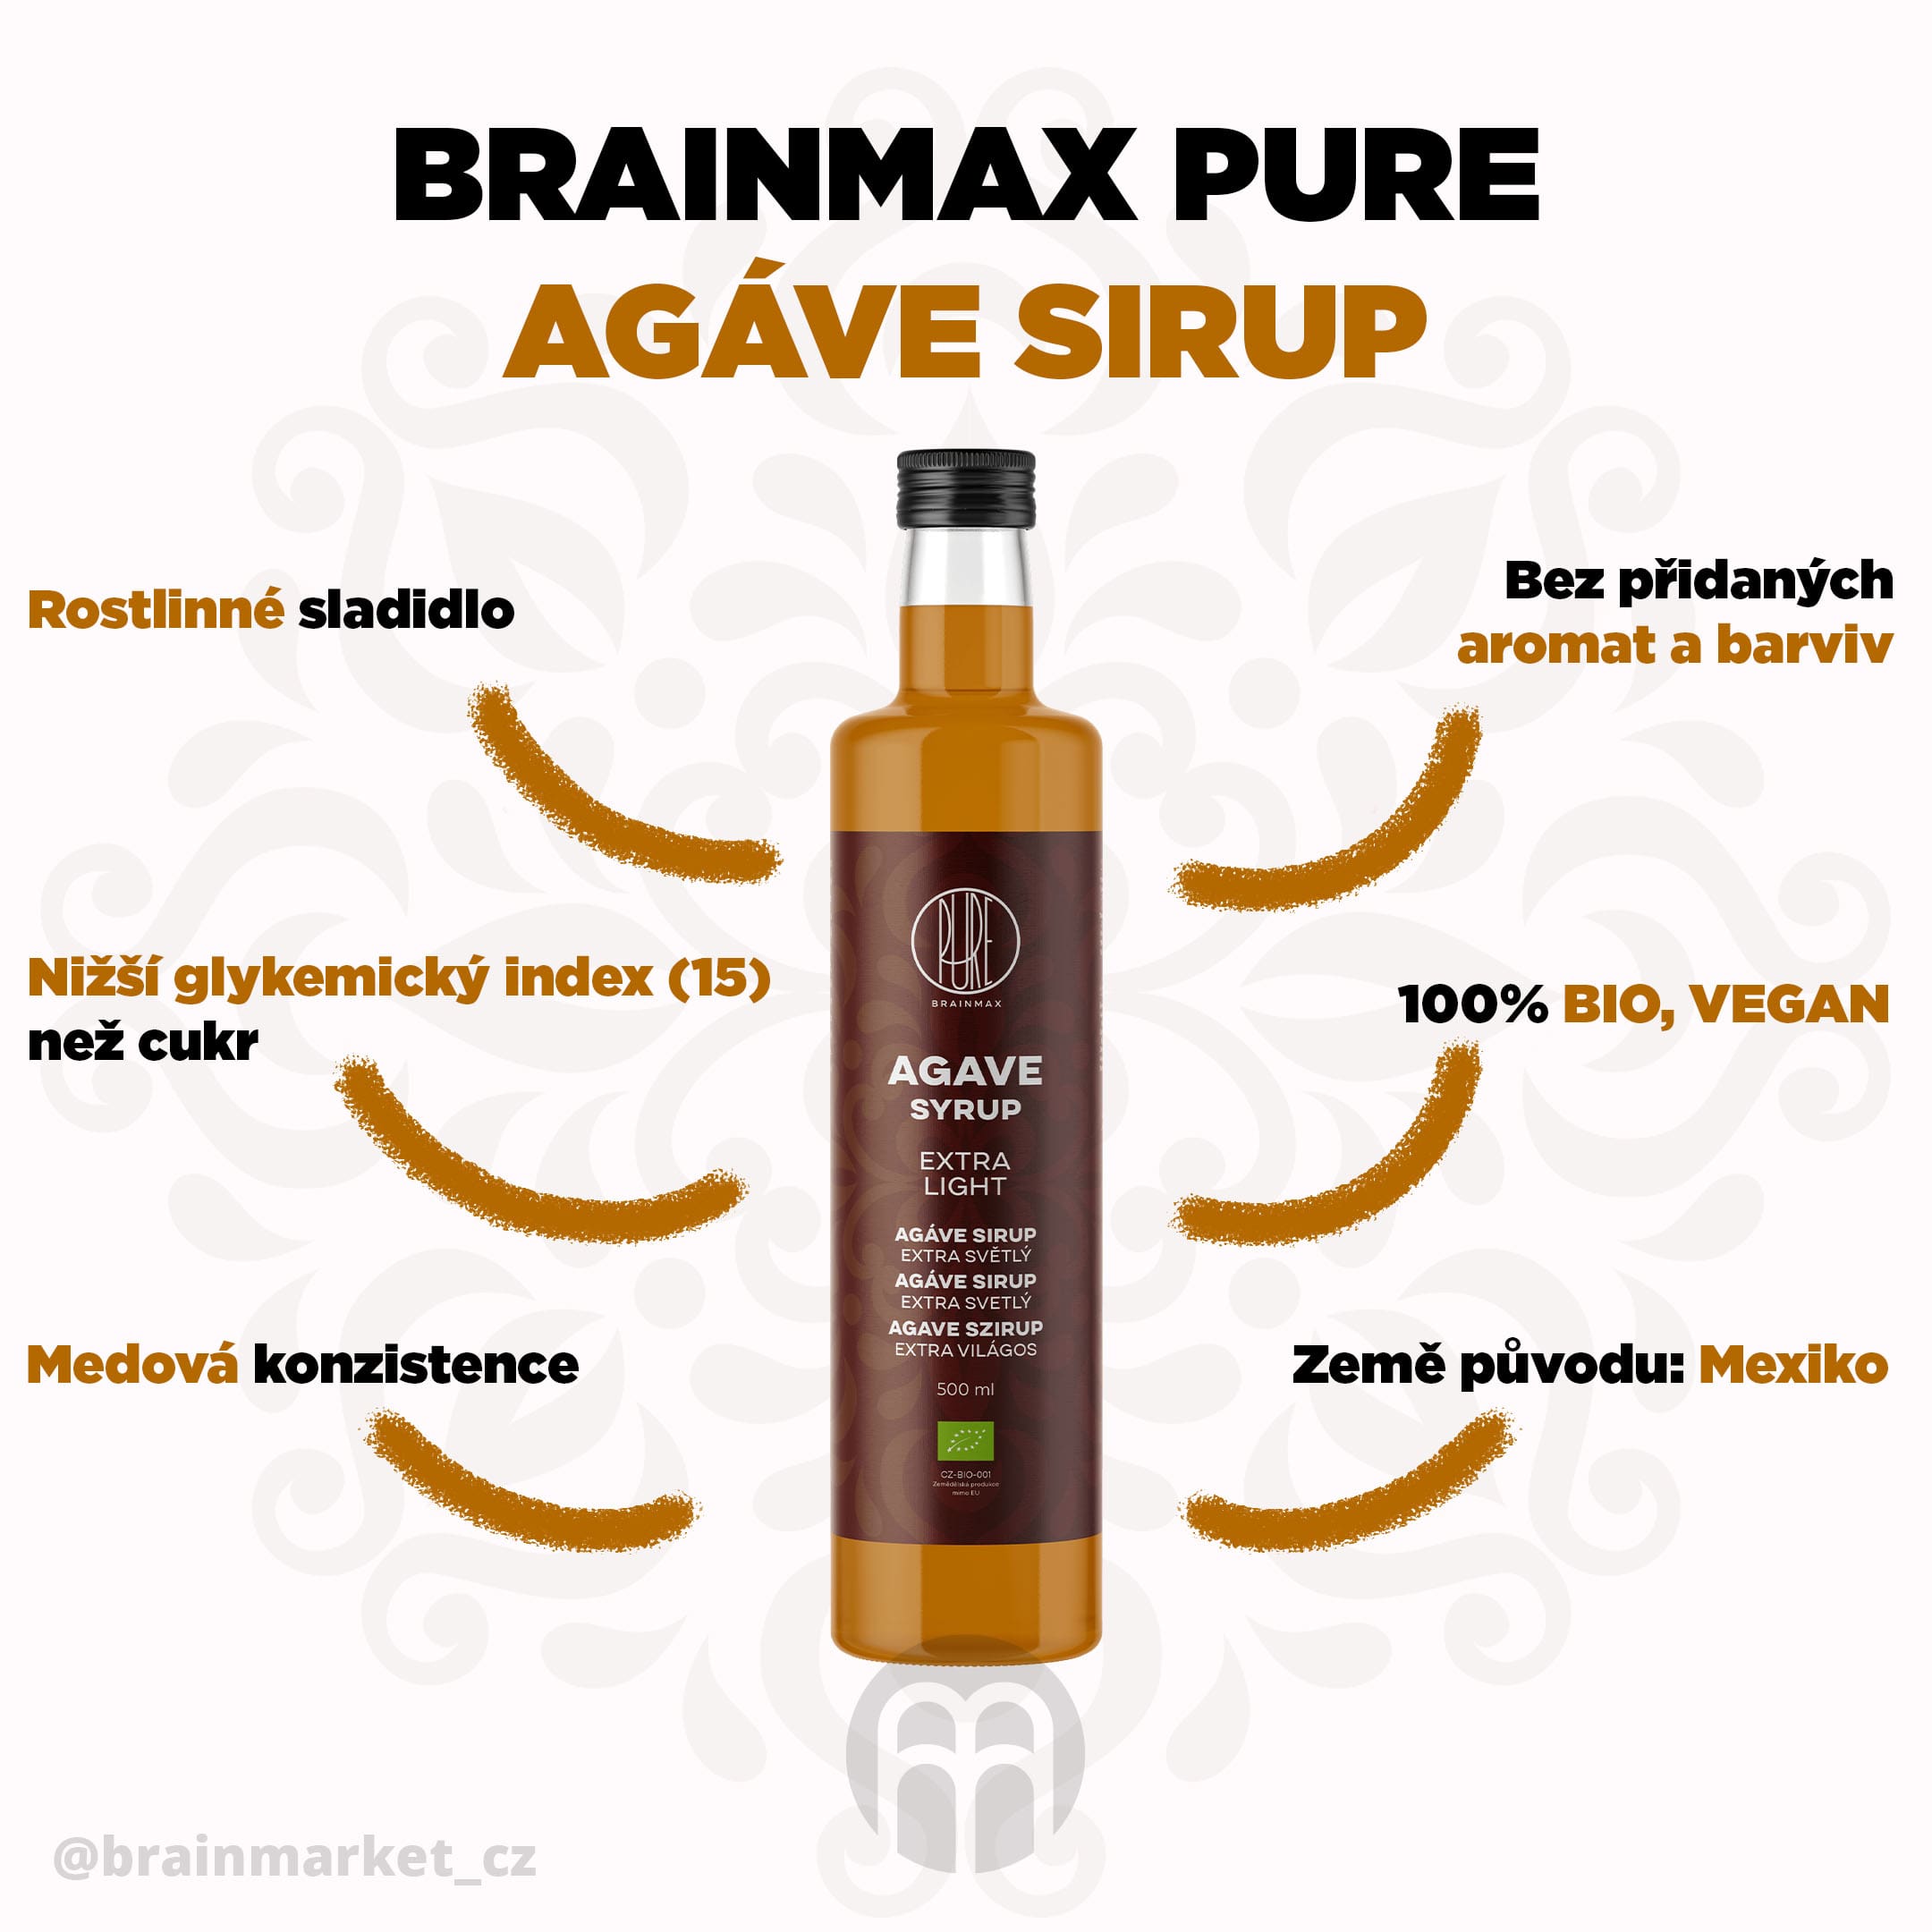 brainmax pure agave sirup infografika brainmarket CZ